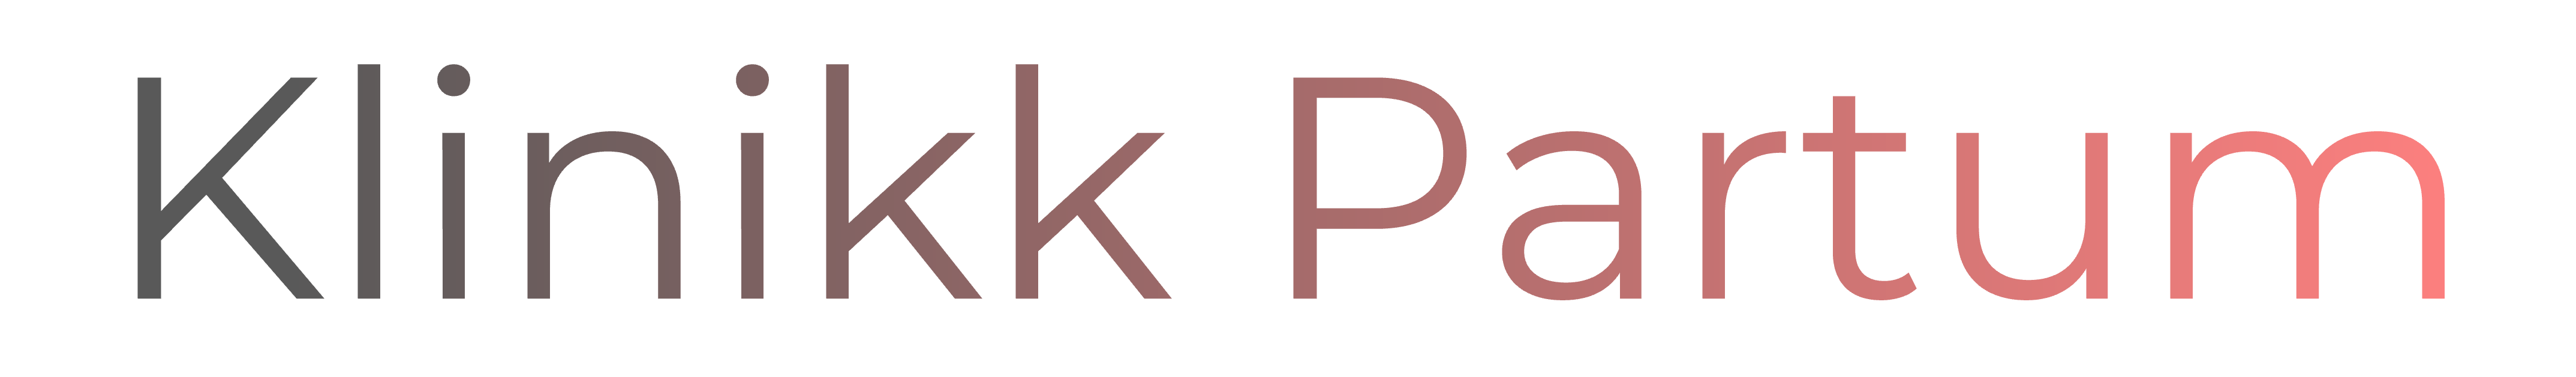 Klinikk Partum logo